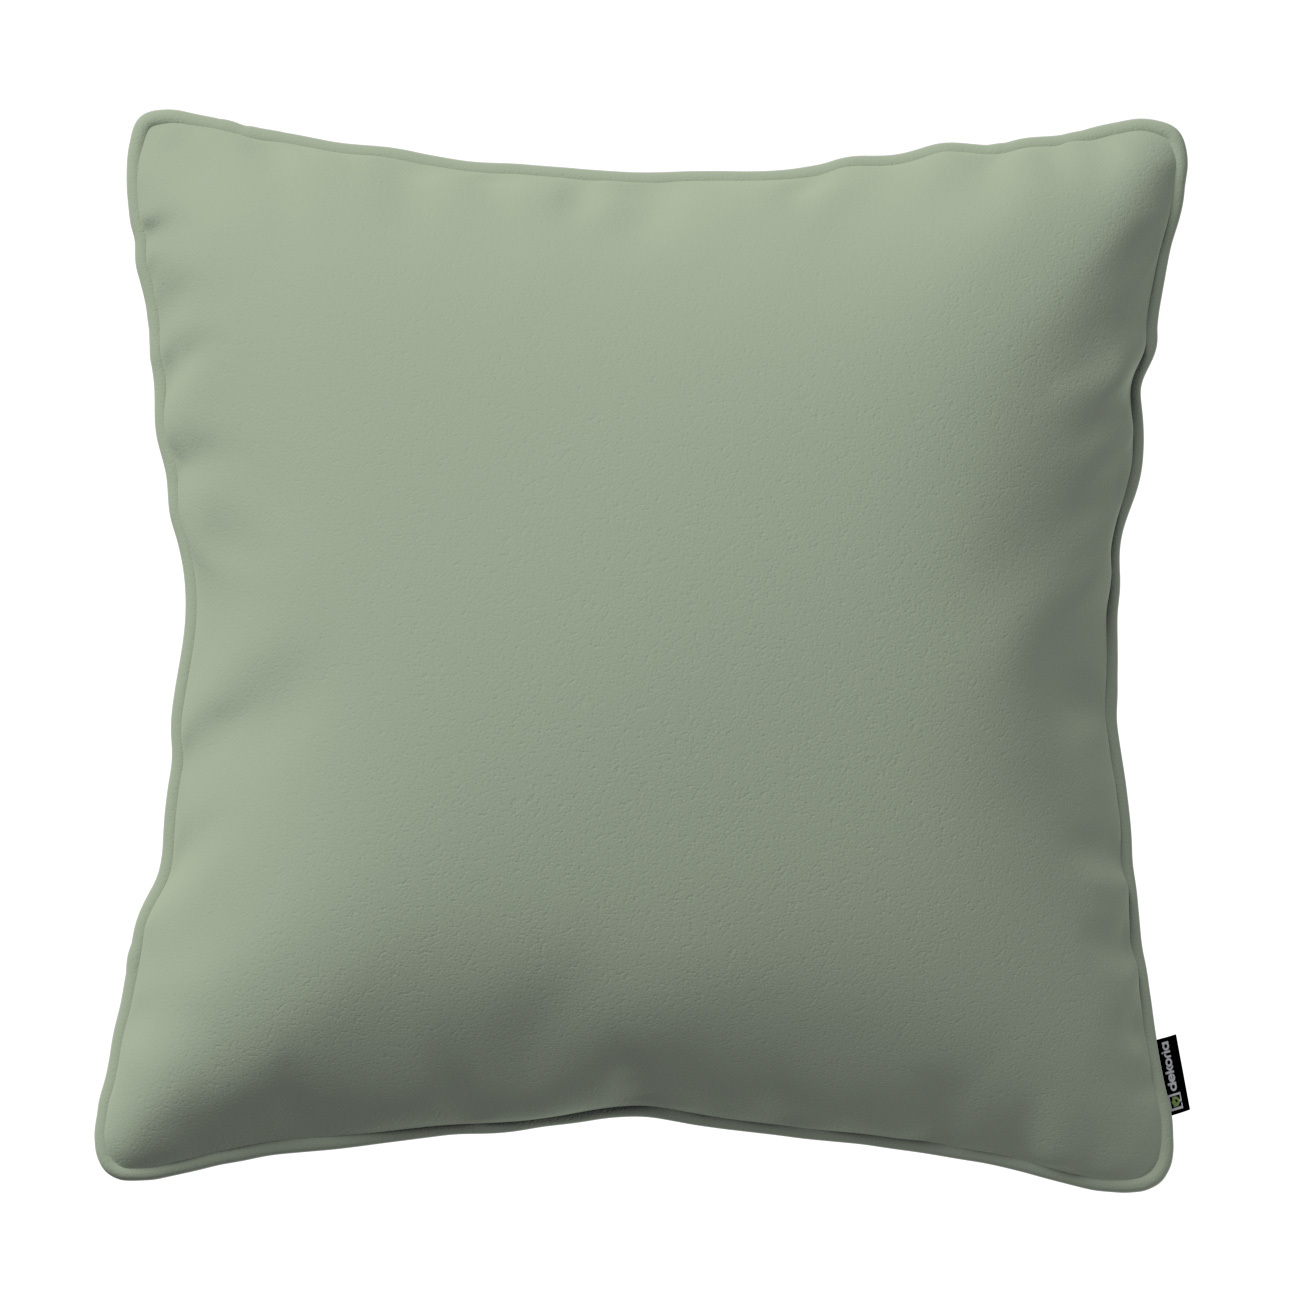 Kissenhülle Gabi mit Paspel, hellgrün, 45 x 45 cm, Crema (144-68) günstig online kaufen